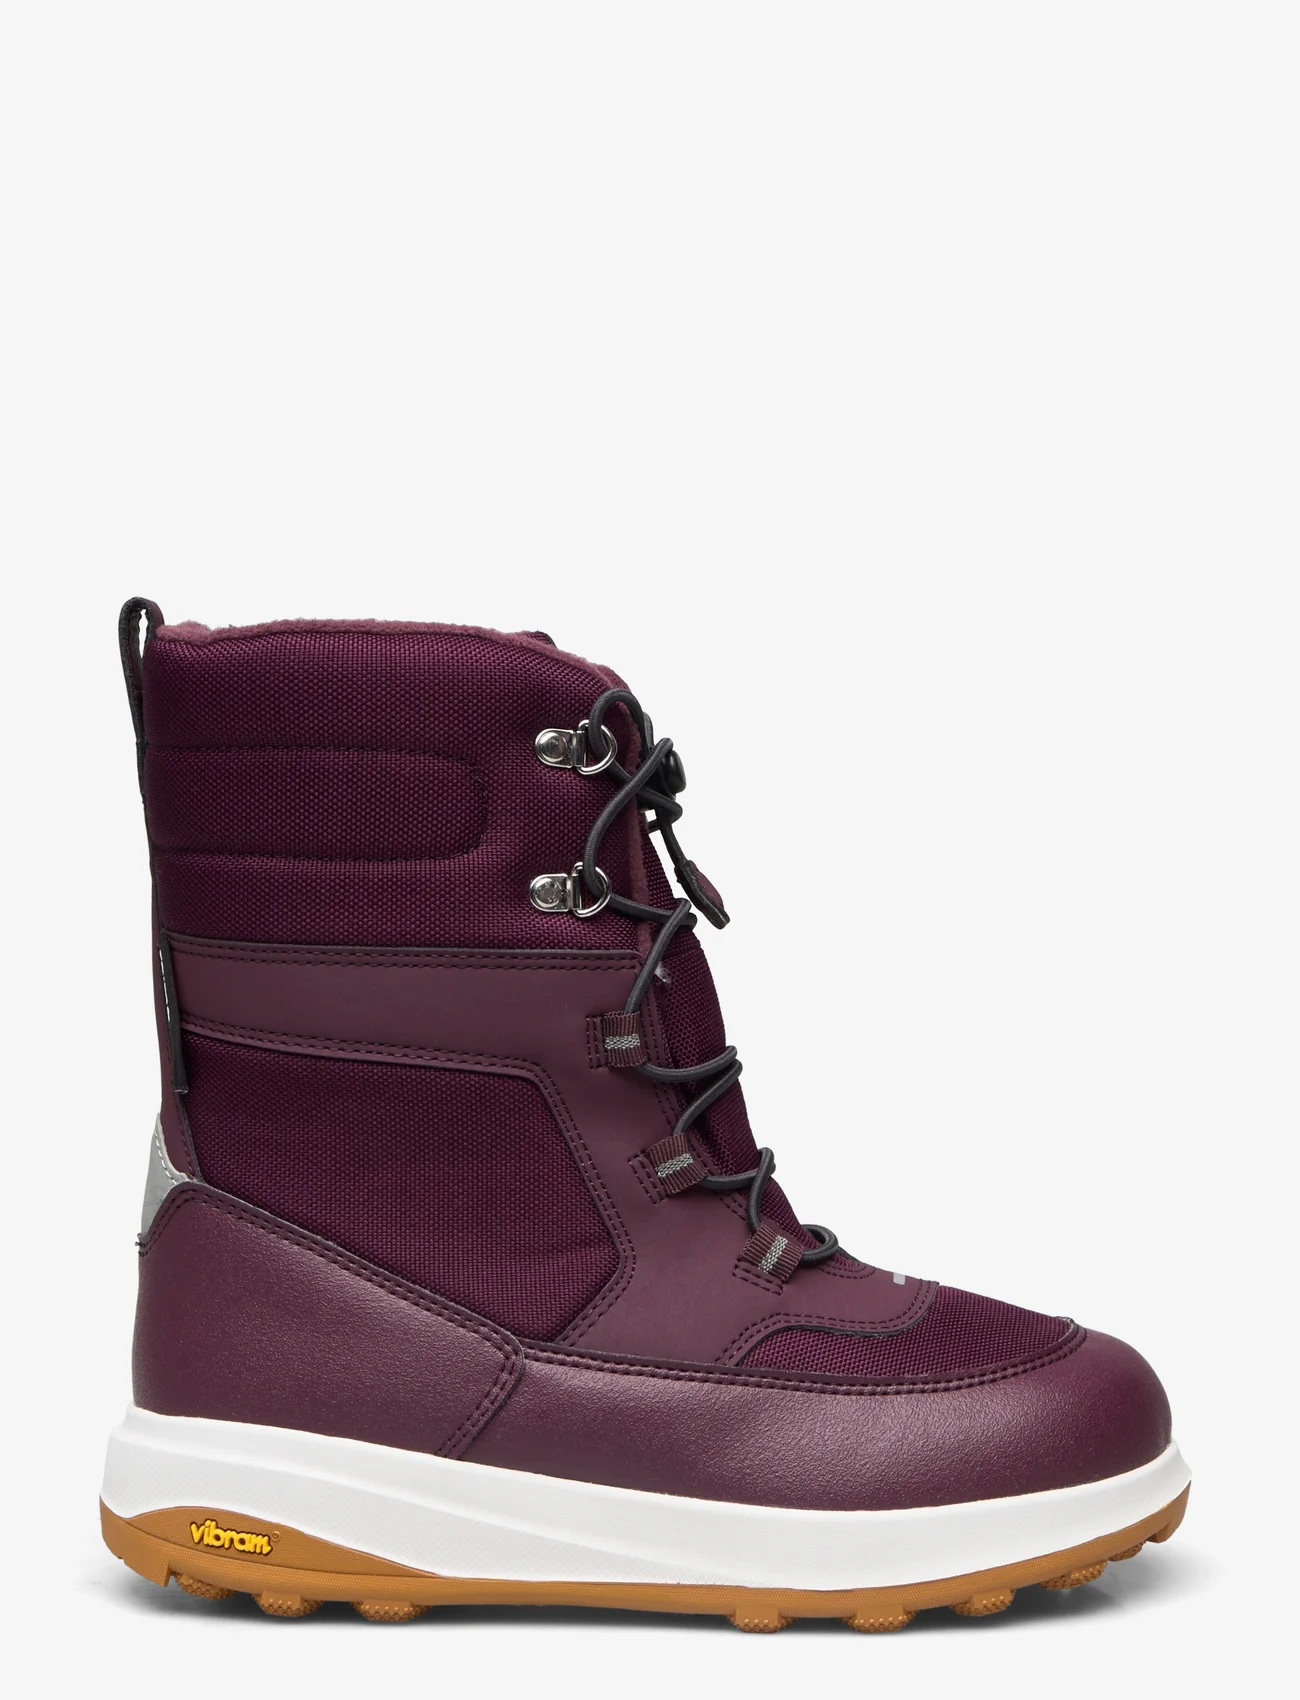 Reima - Reimatec winter boots, Laplander 2.0 - kids - deep purple - 1